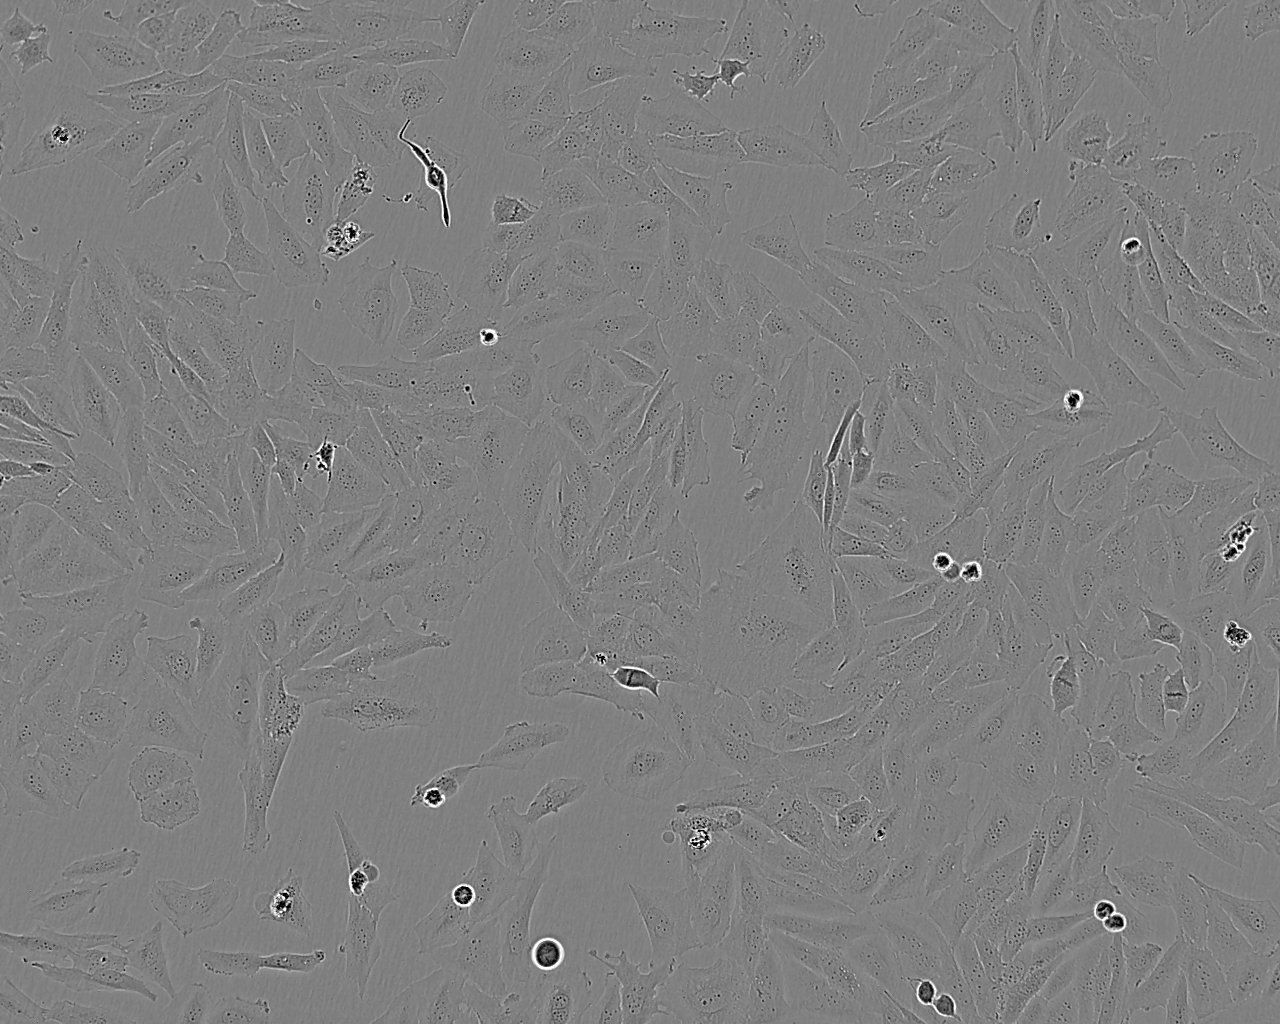 MLO-Y4 小鼠骨样细胞系,MLO-Y4